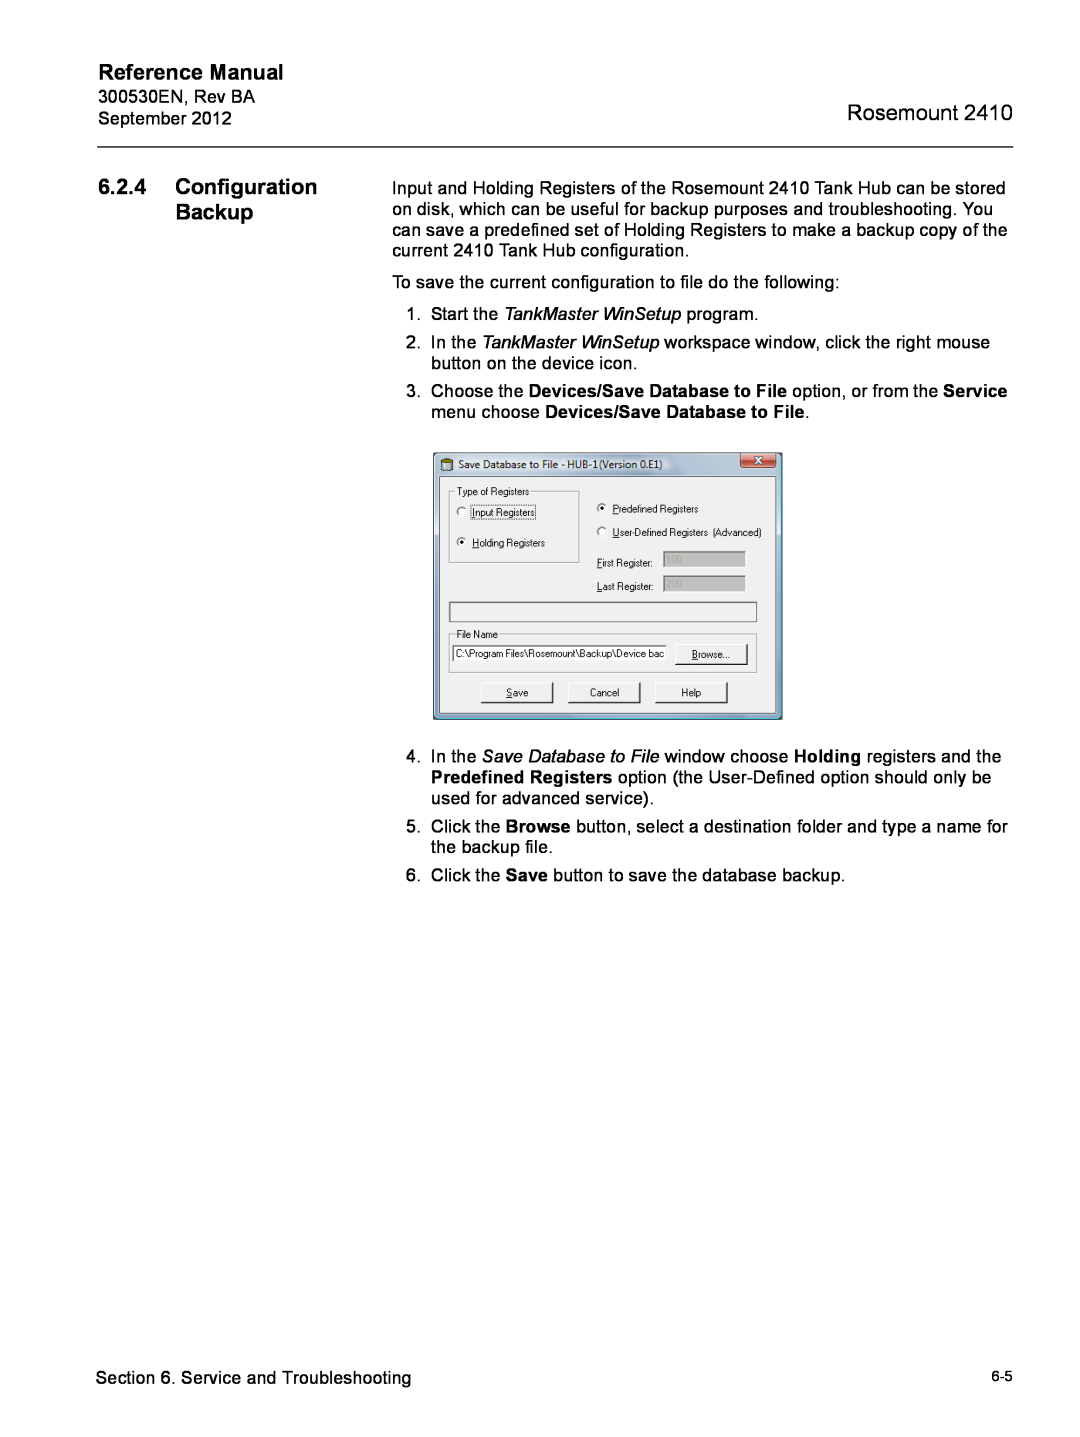 Emerson Process Management Rosemount 2410 manual Configuration Backup, Reference Manual 